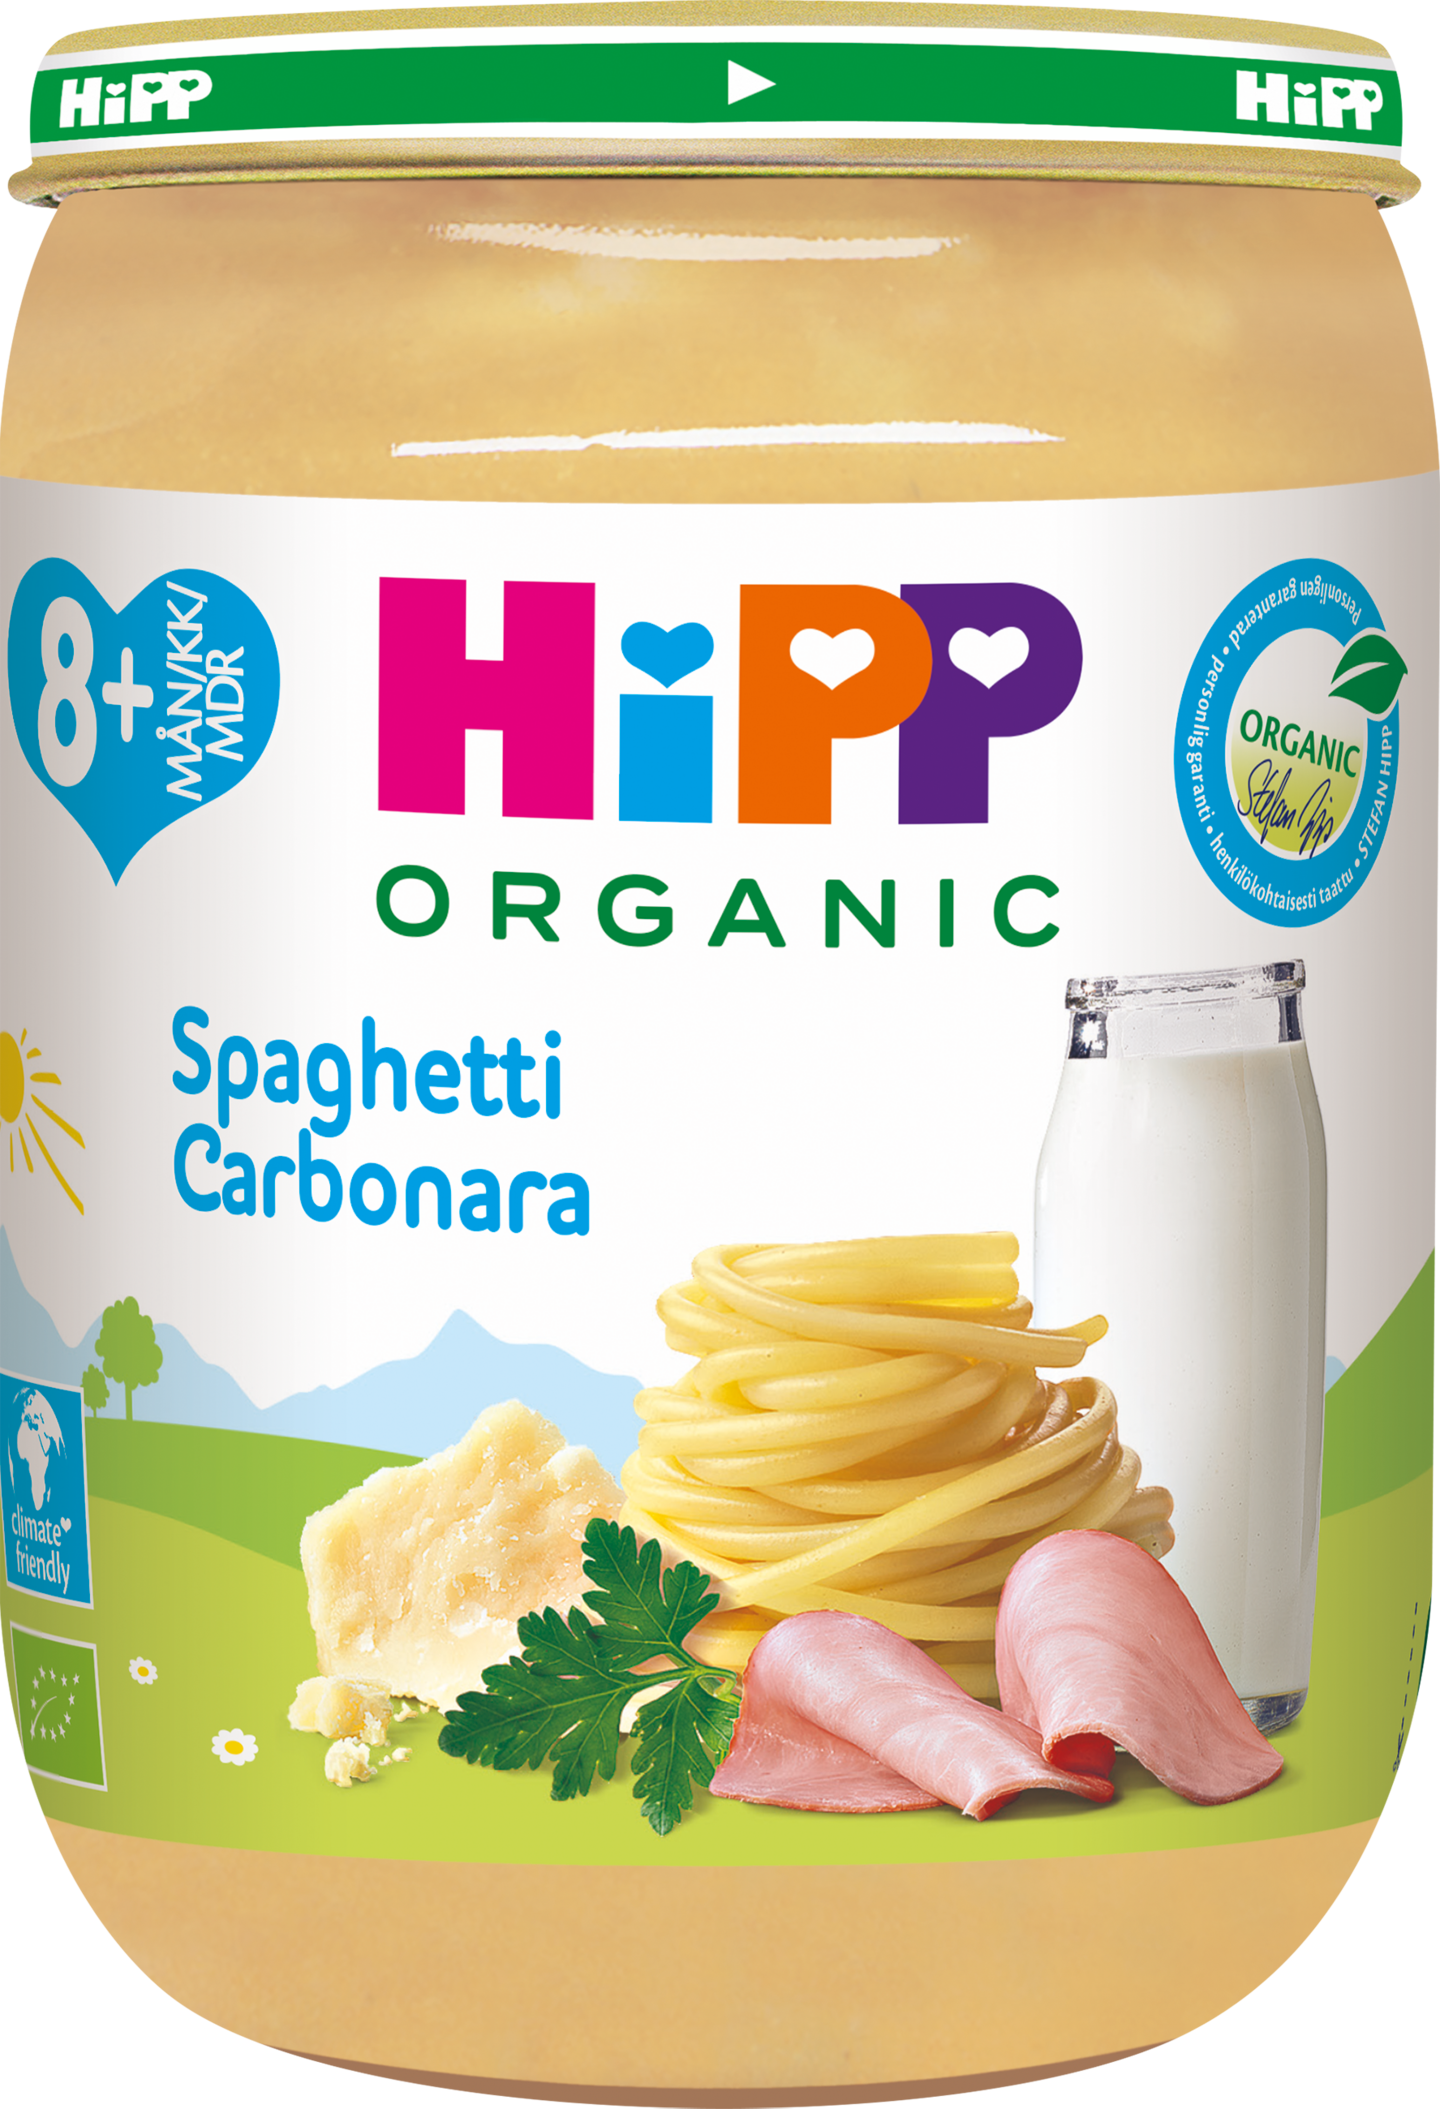 HiPP Luomu Spaghetti Carbonara 190g 8kk — HoReCa-tukku Kespro